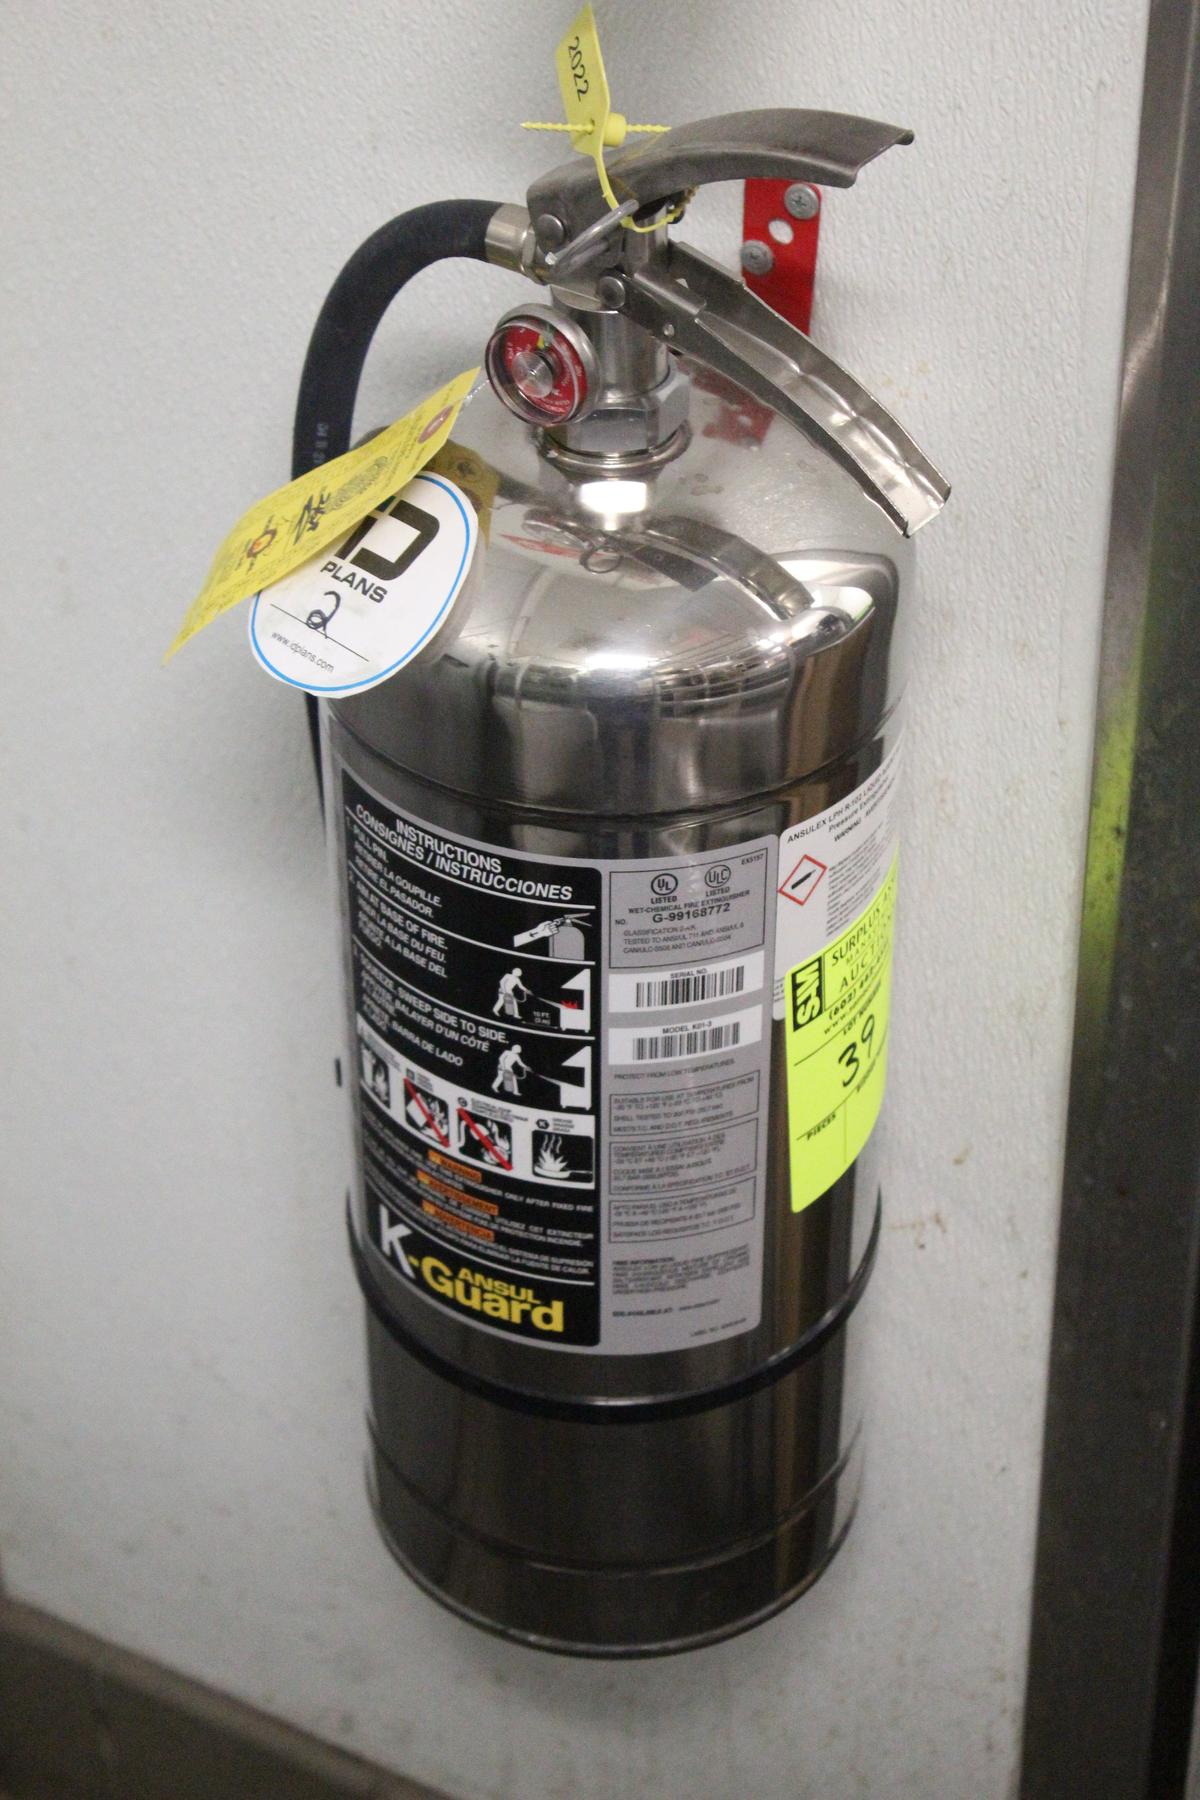 Ansul Guard Kitchen Fire Extinguisher